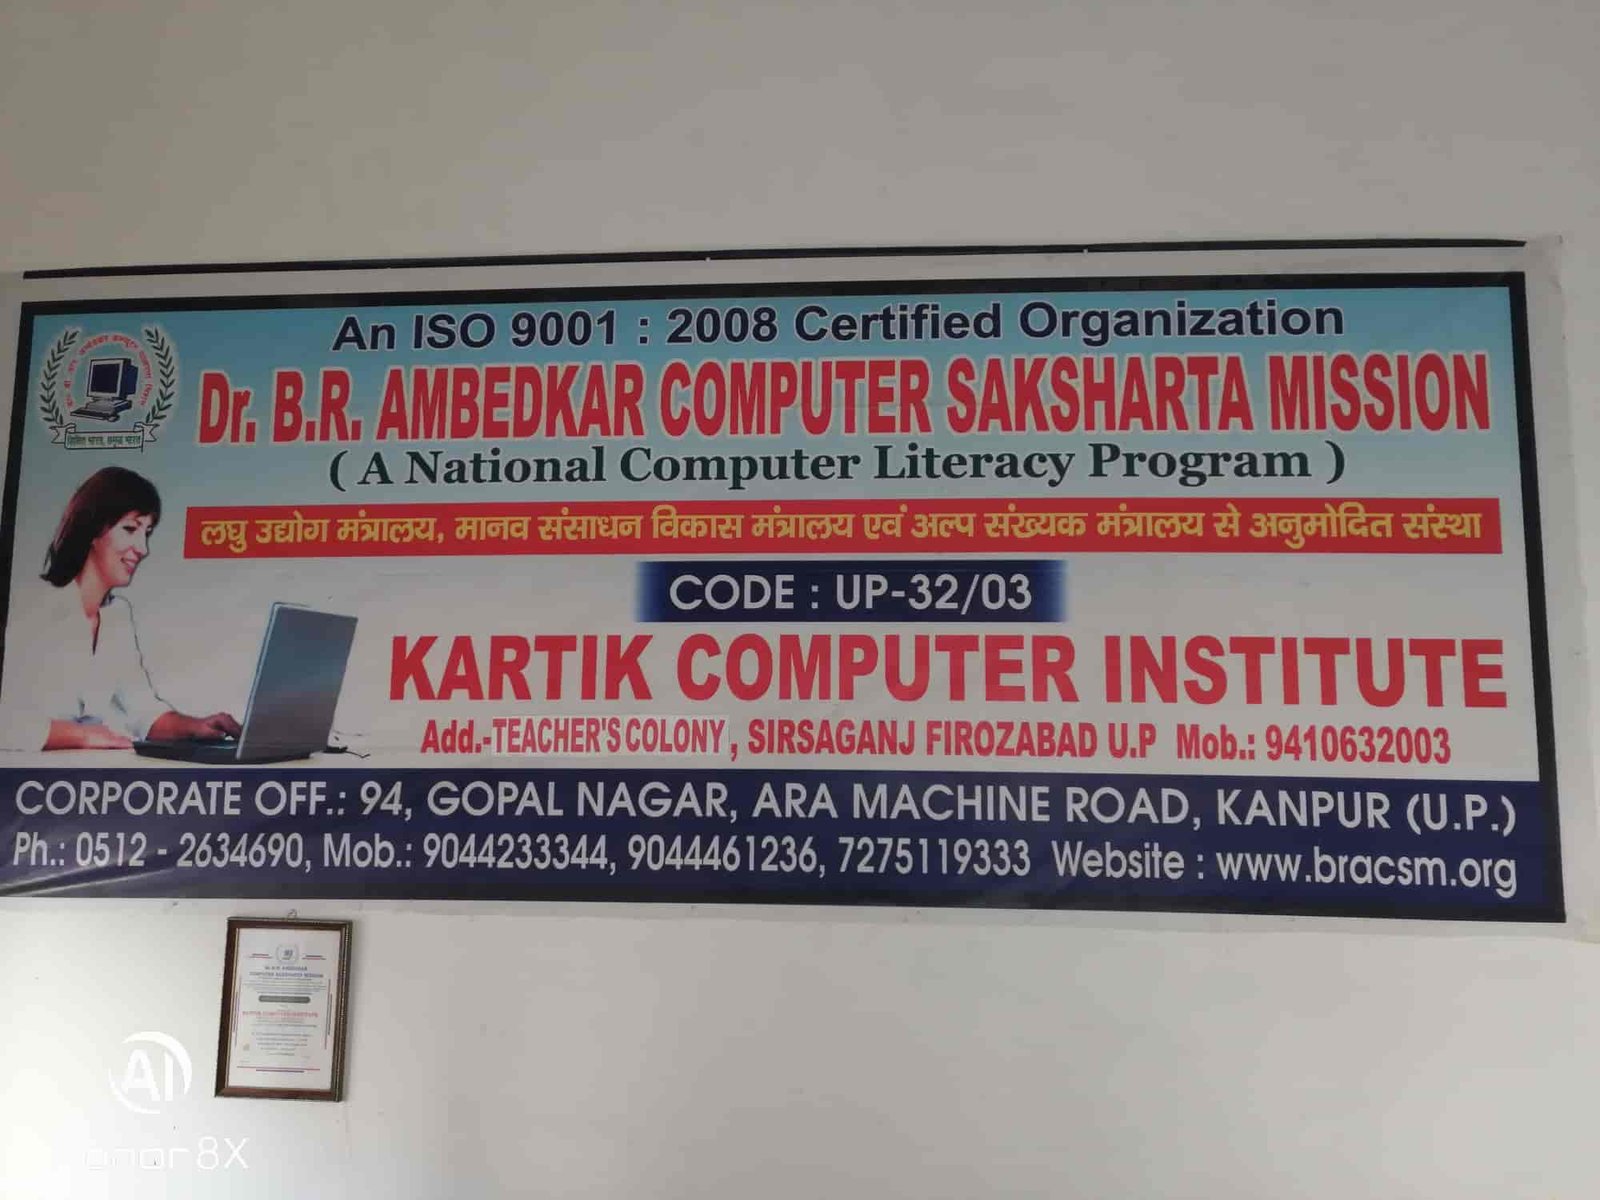 Kartik Computer Institute